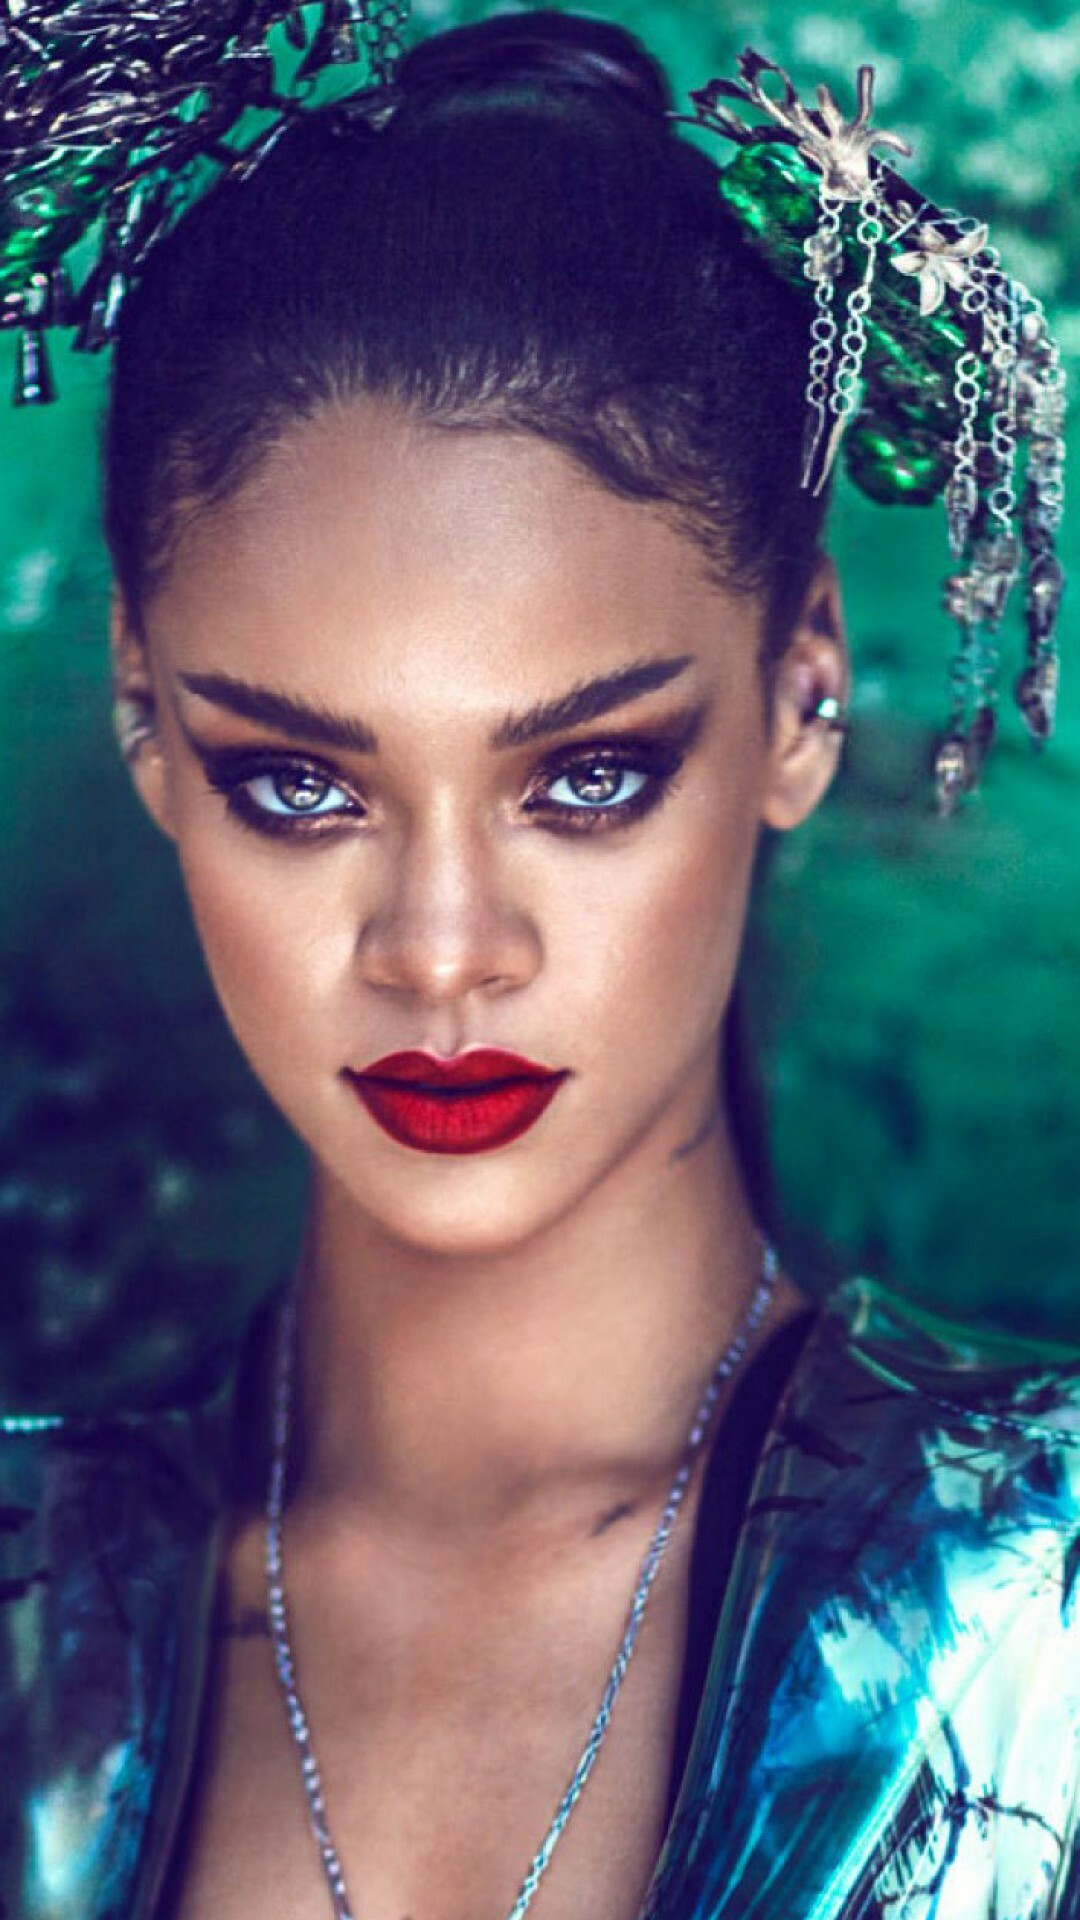 Rihanna: Top music artist, "Sledgehammer", the lead single from the Star Trek Beyond soundtrack. 1080x1920 Full HD Background.